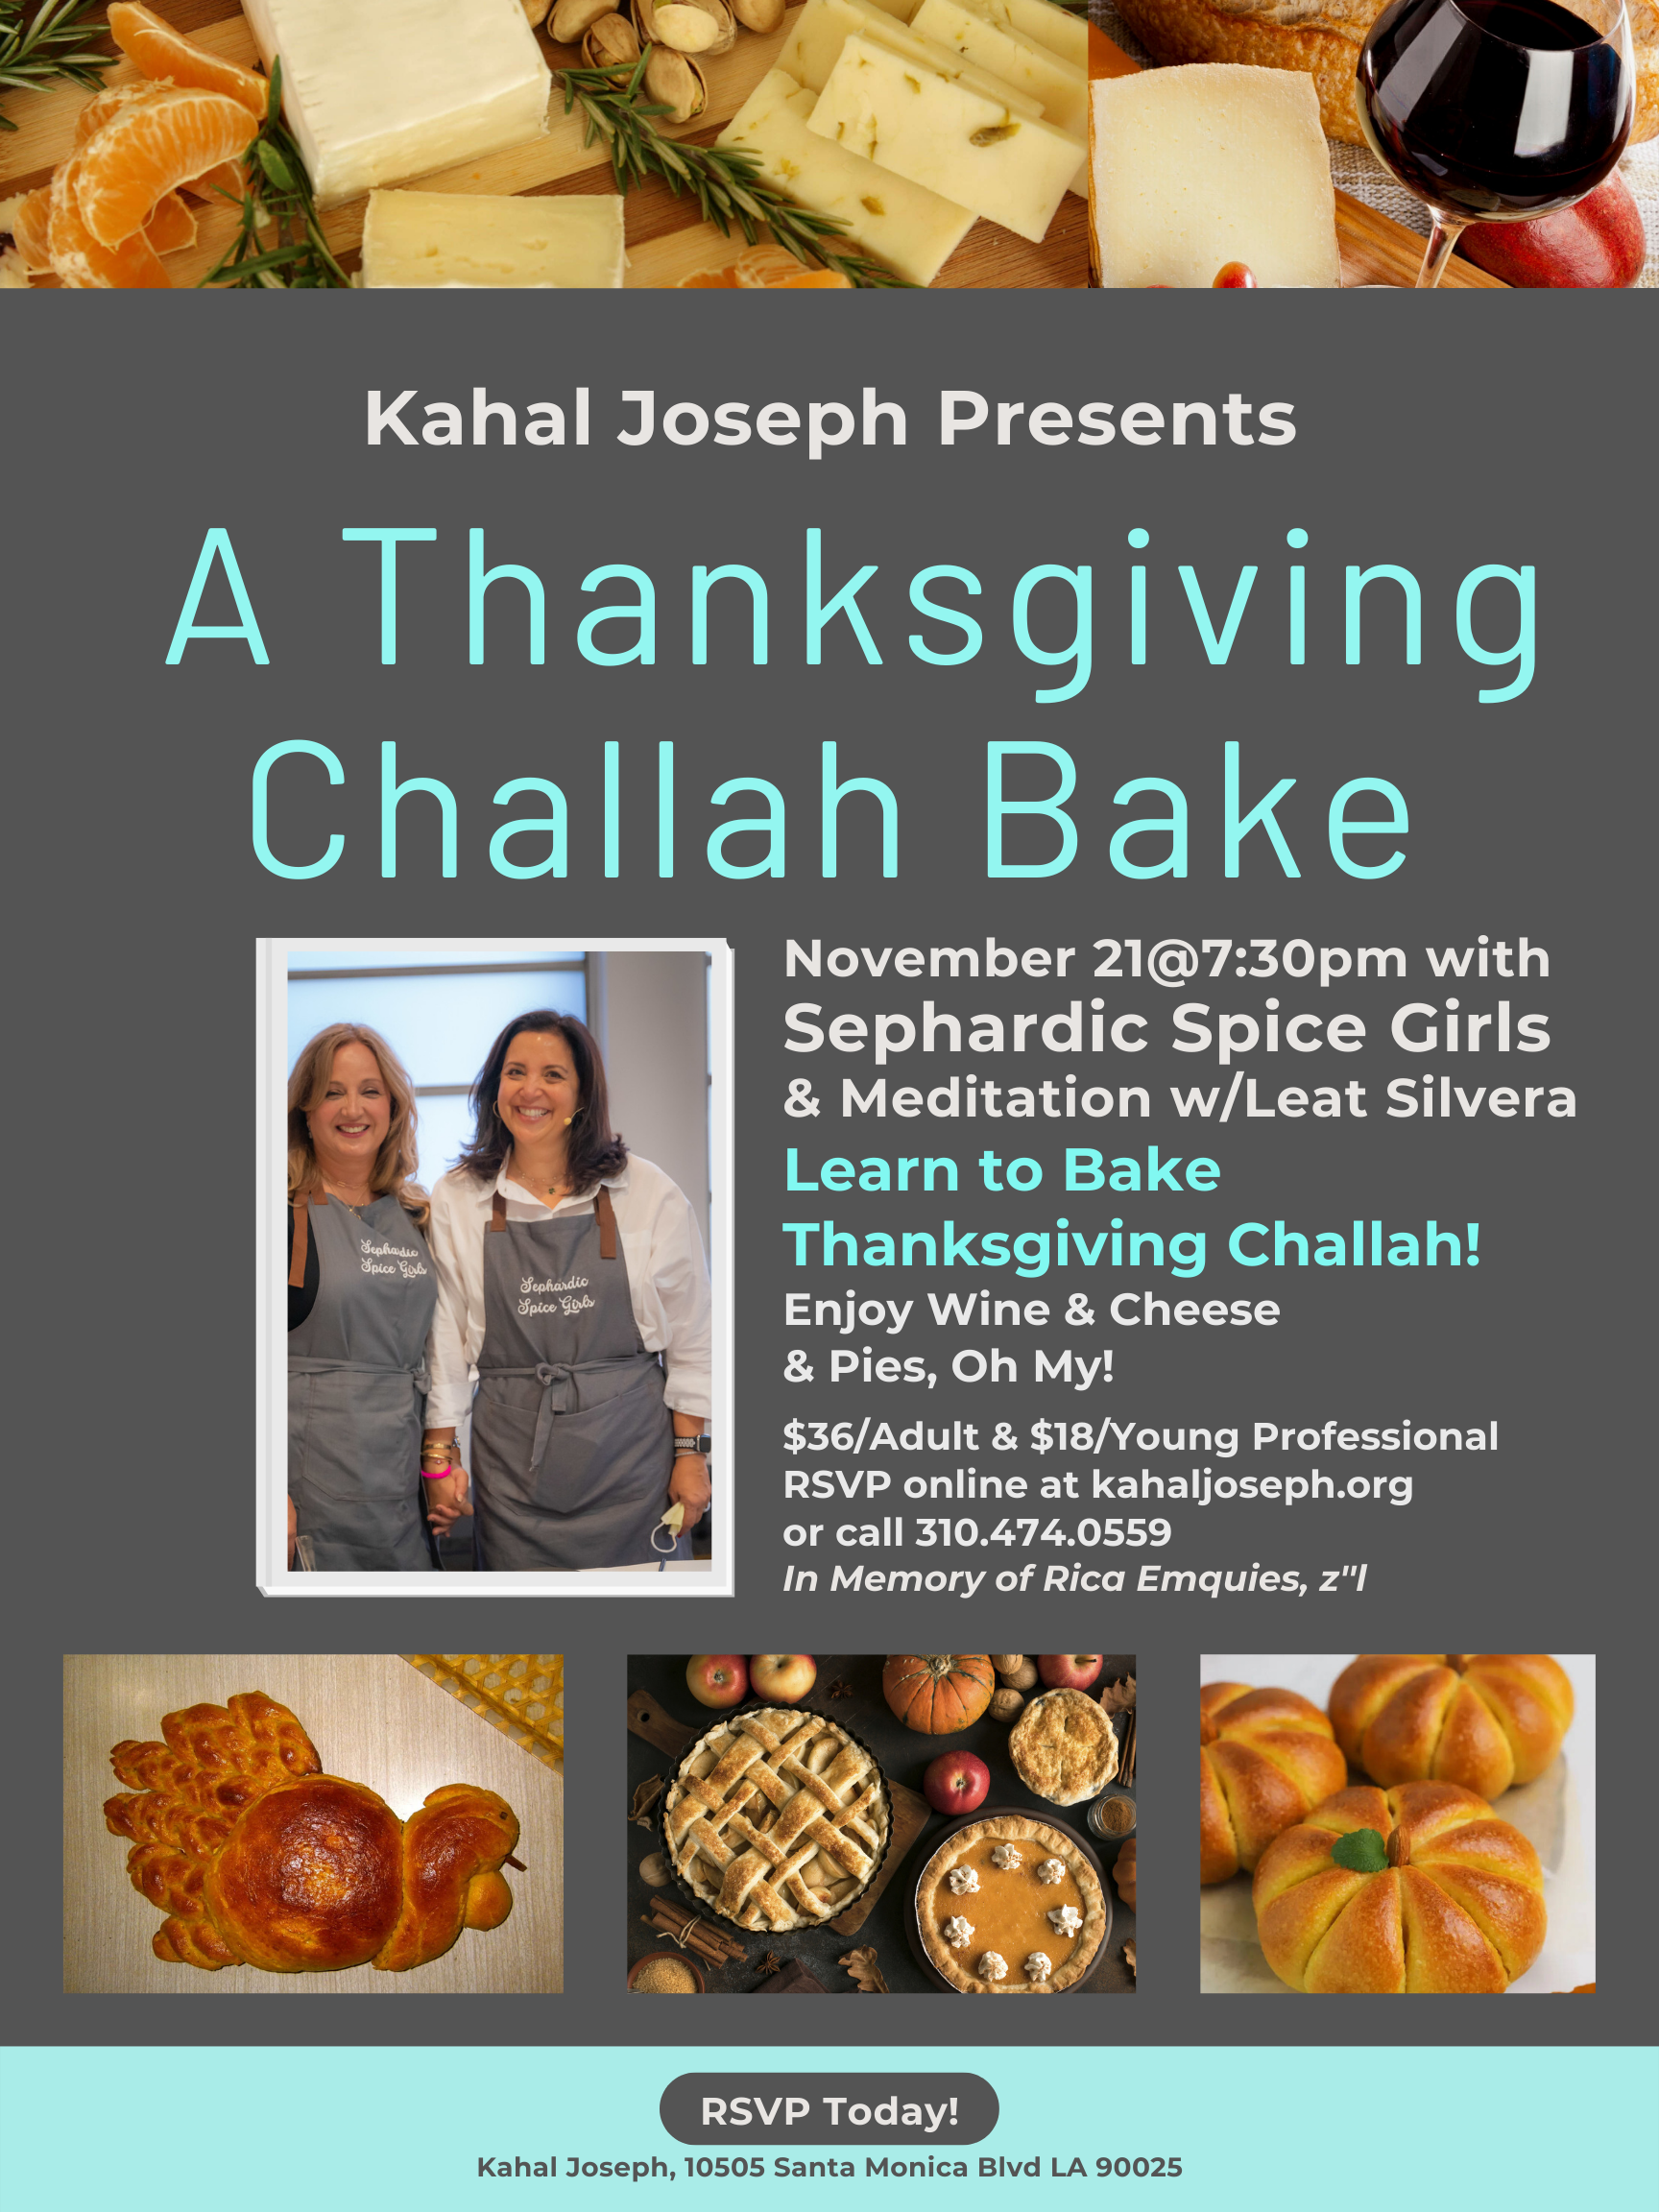 Challah Bake with the Sephardic Spice Girls, Mon 11/21